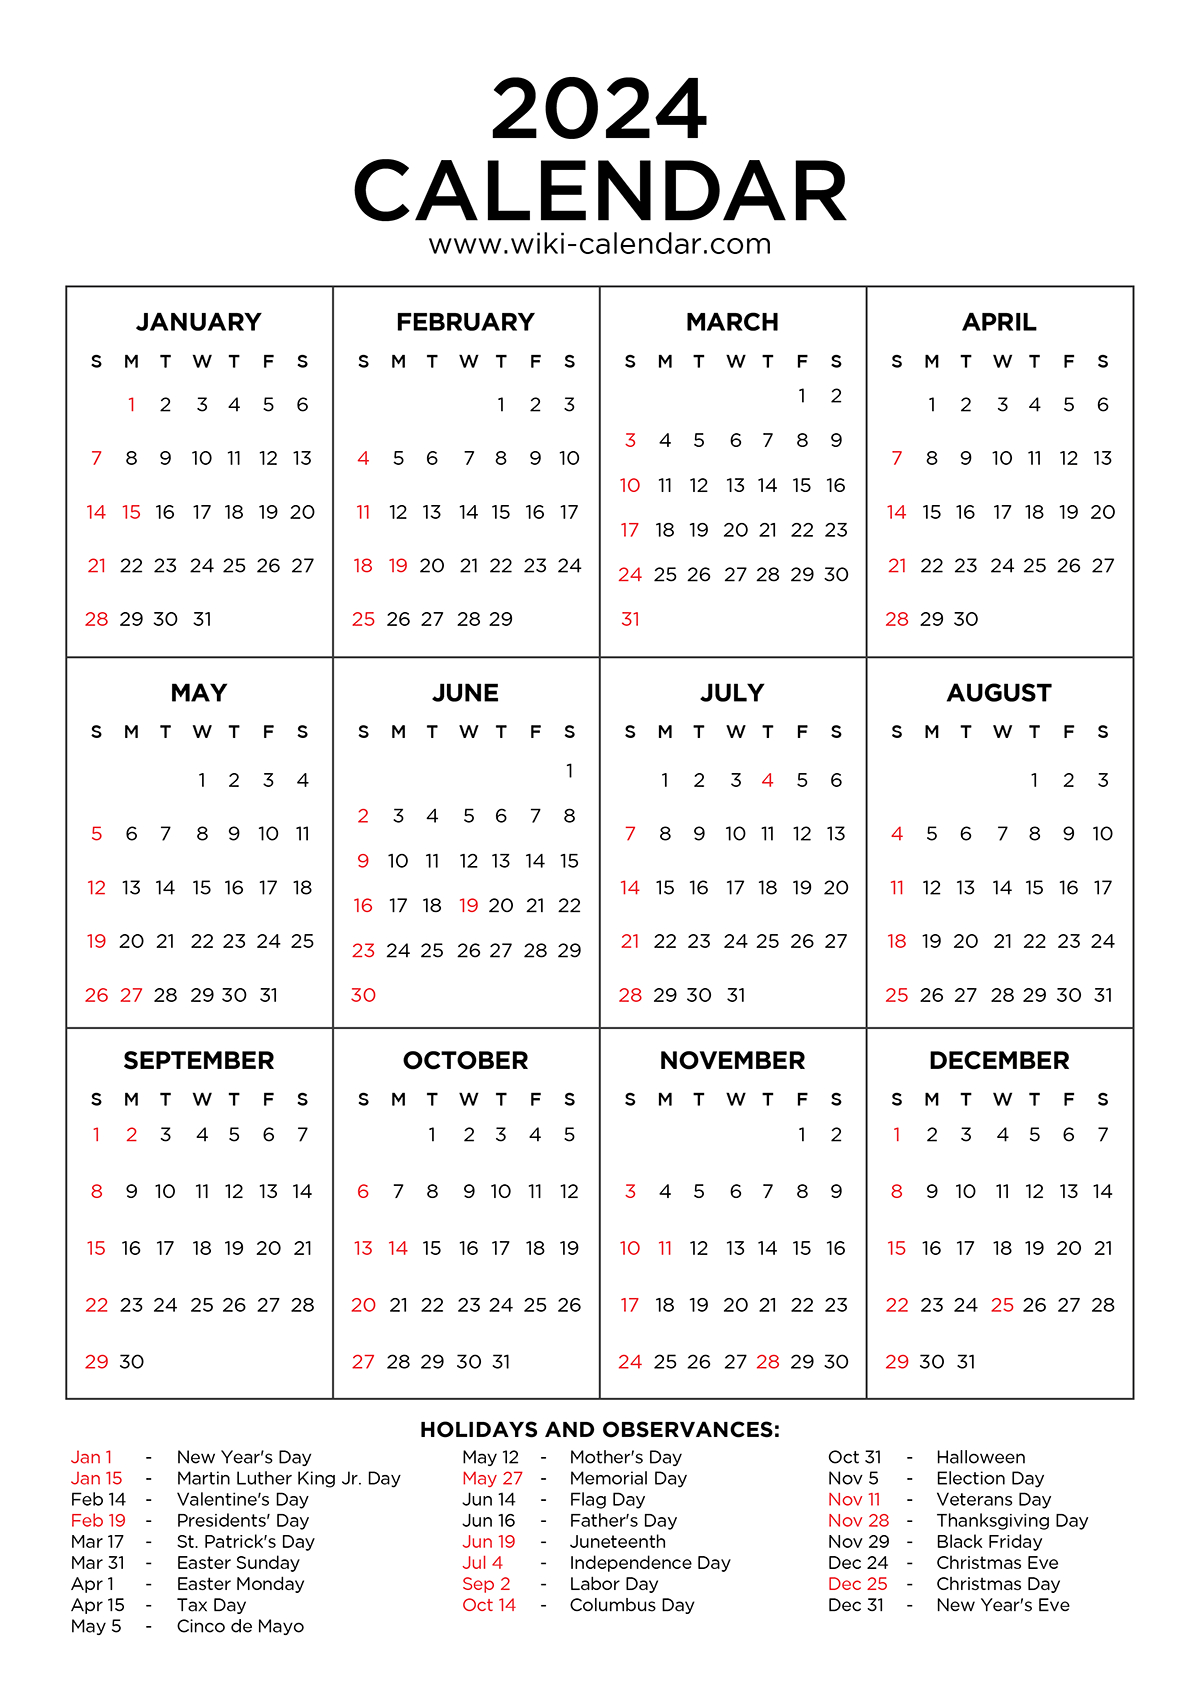 Year 2024 Calendar Printable With Holidays - Wiki Calendar | Time And Date Calendar 2024 Printable